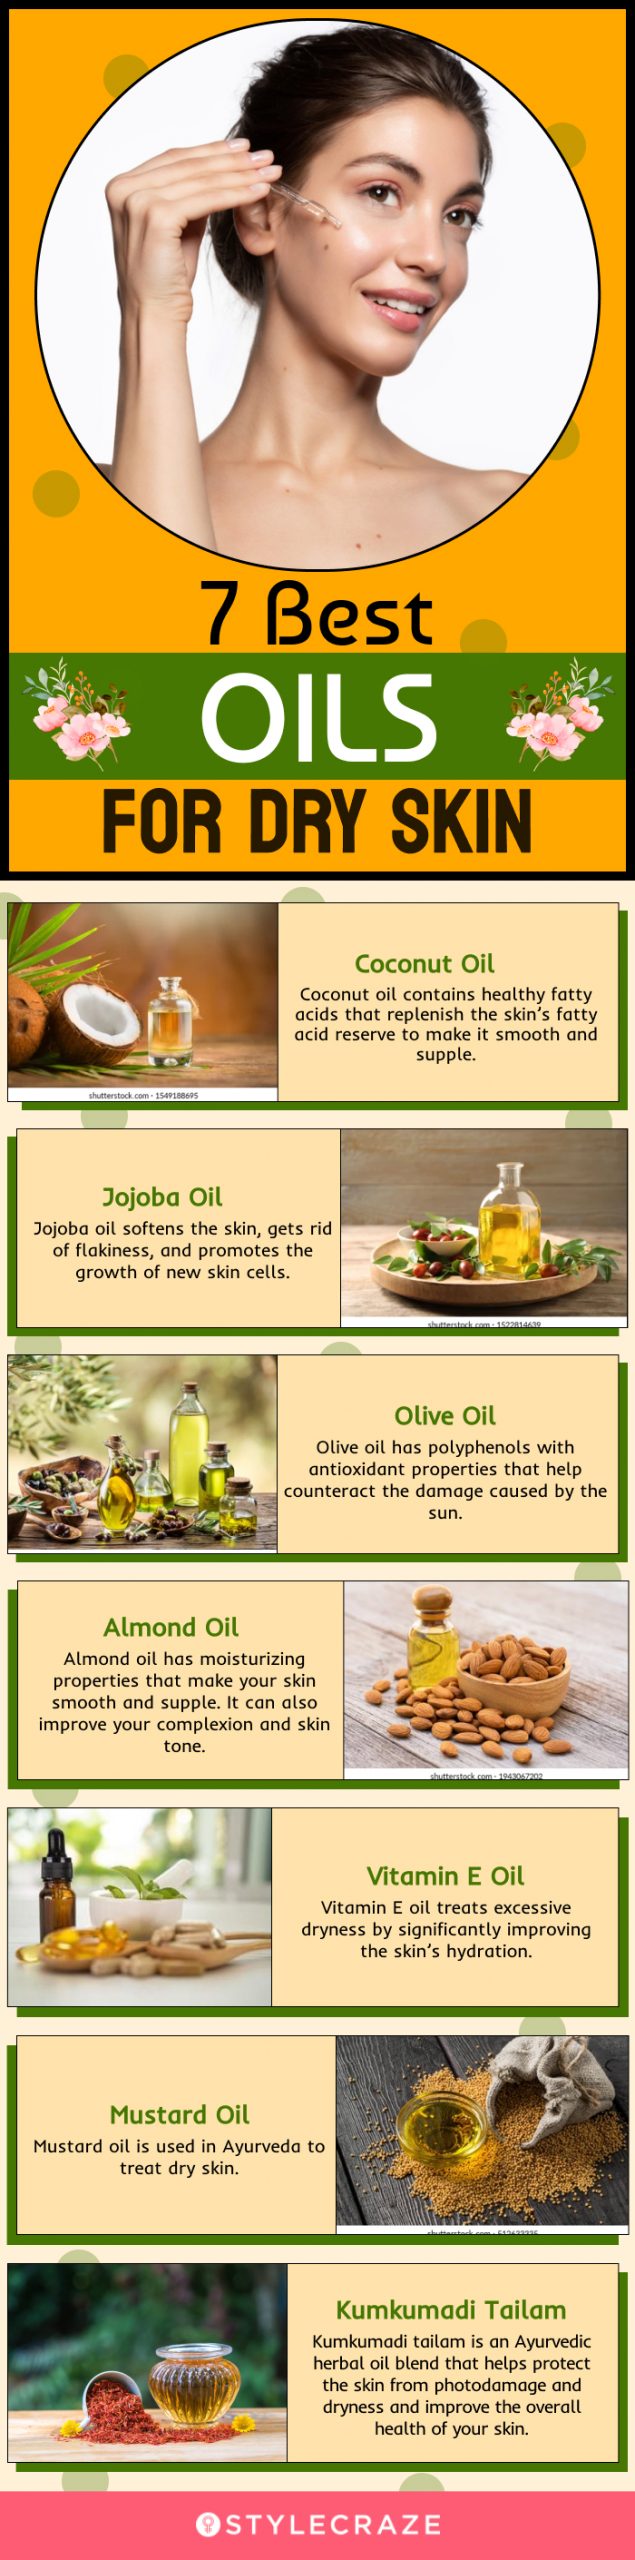 7 best oils for dry skin [infographic]